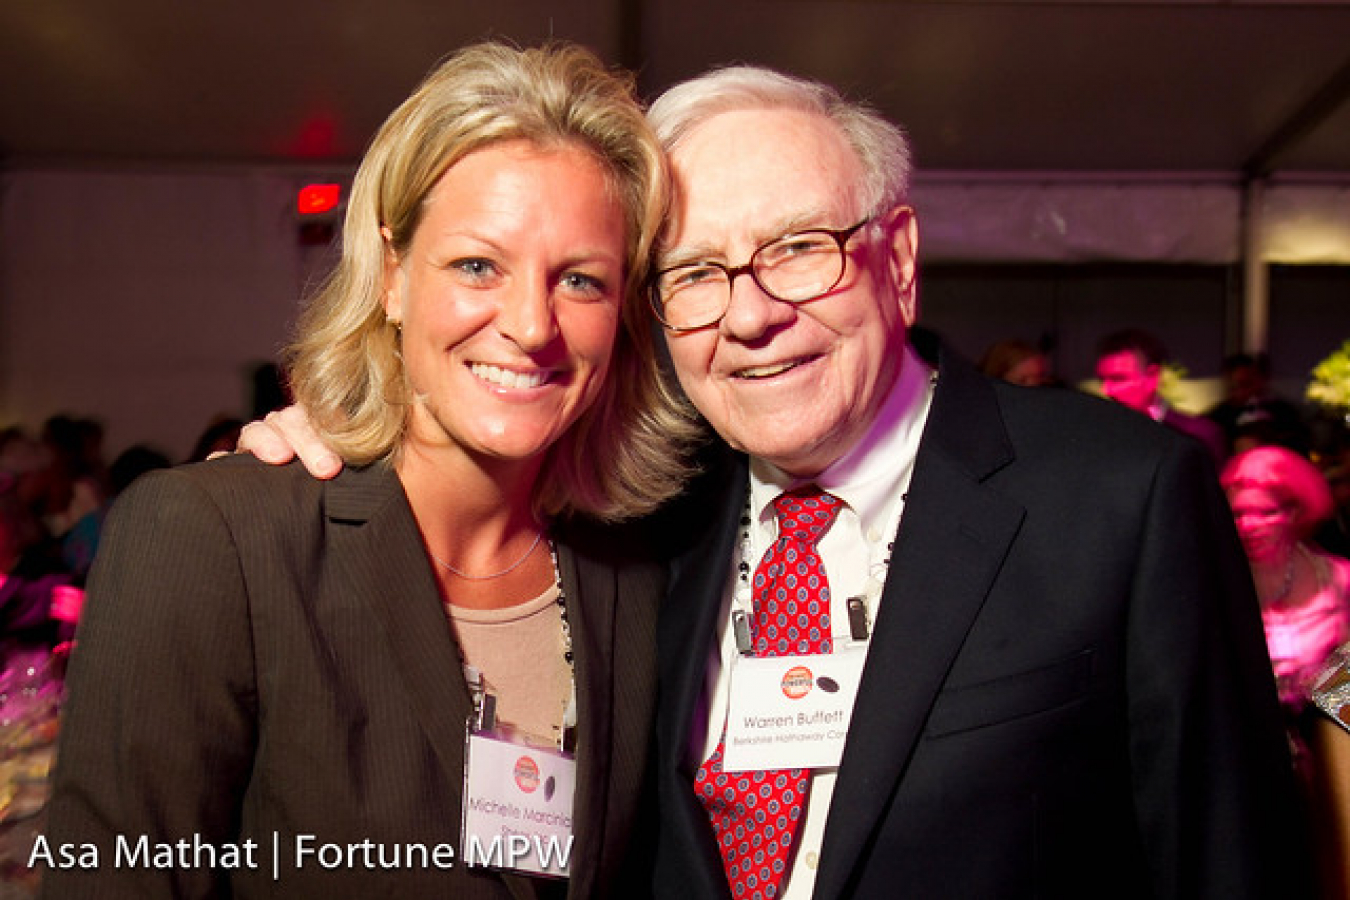 Warren Buffett one of the World's greatest investors